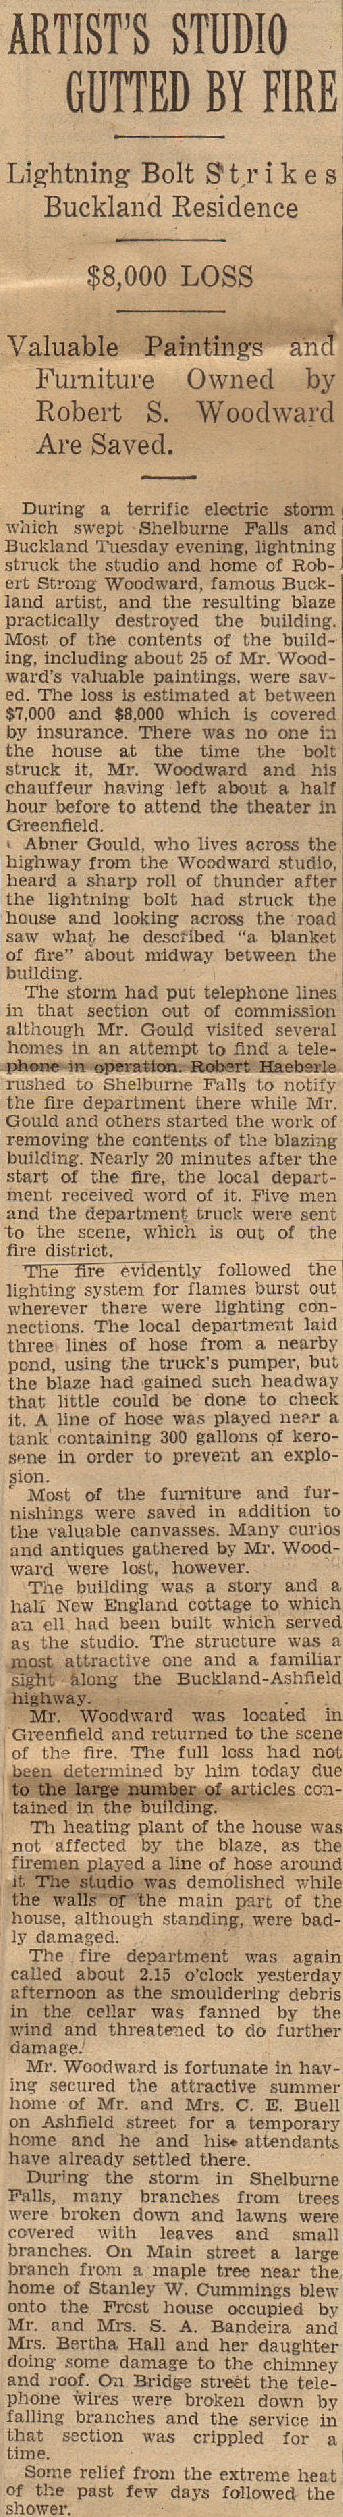  North Adams Transcript, July 5, 1934 